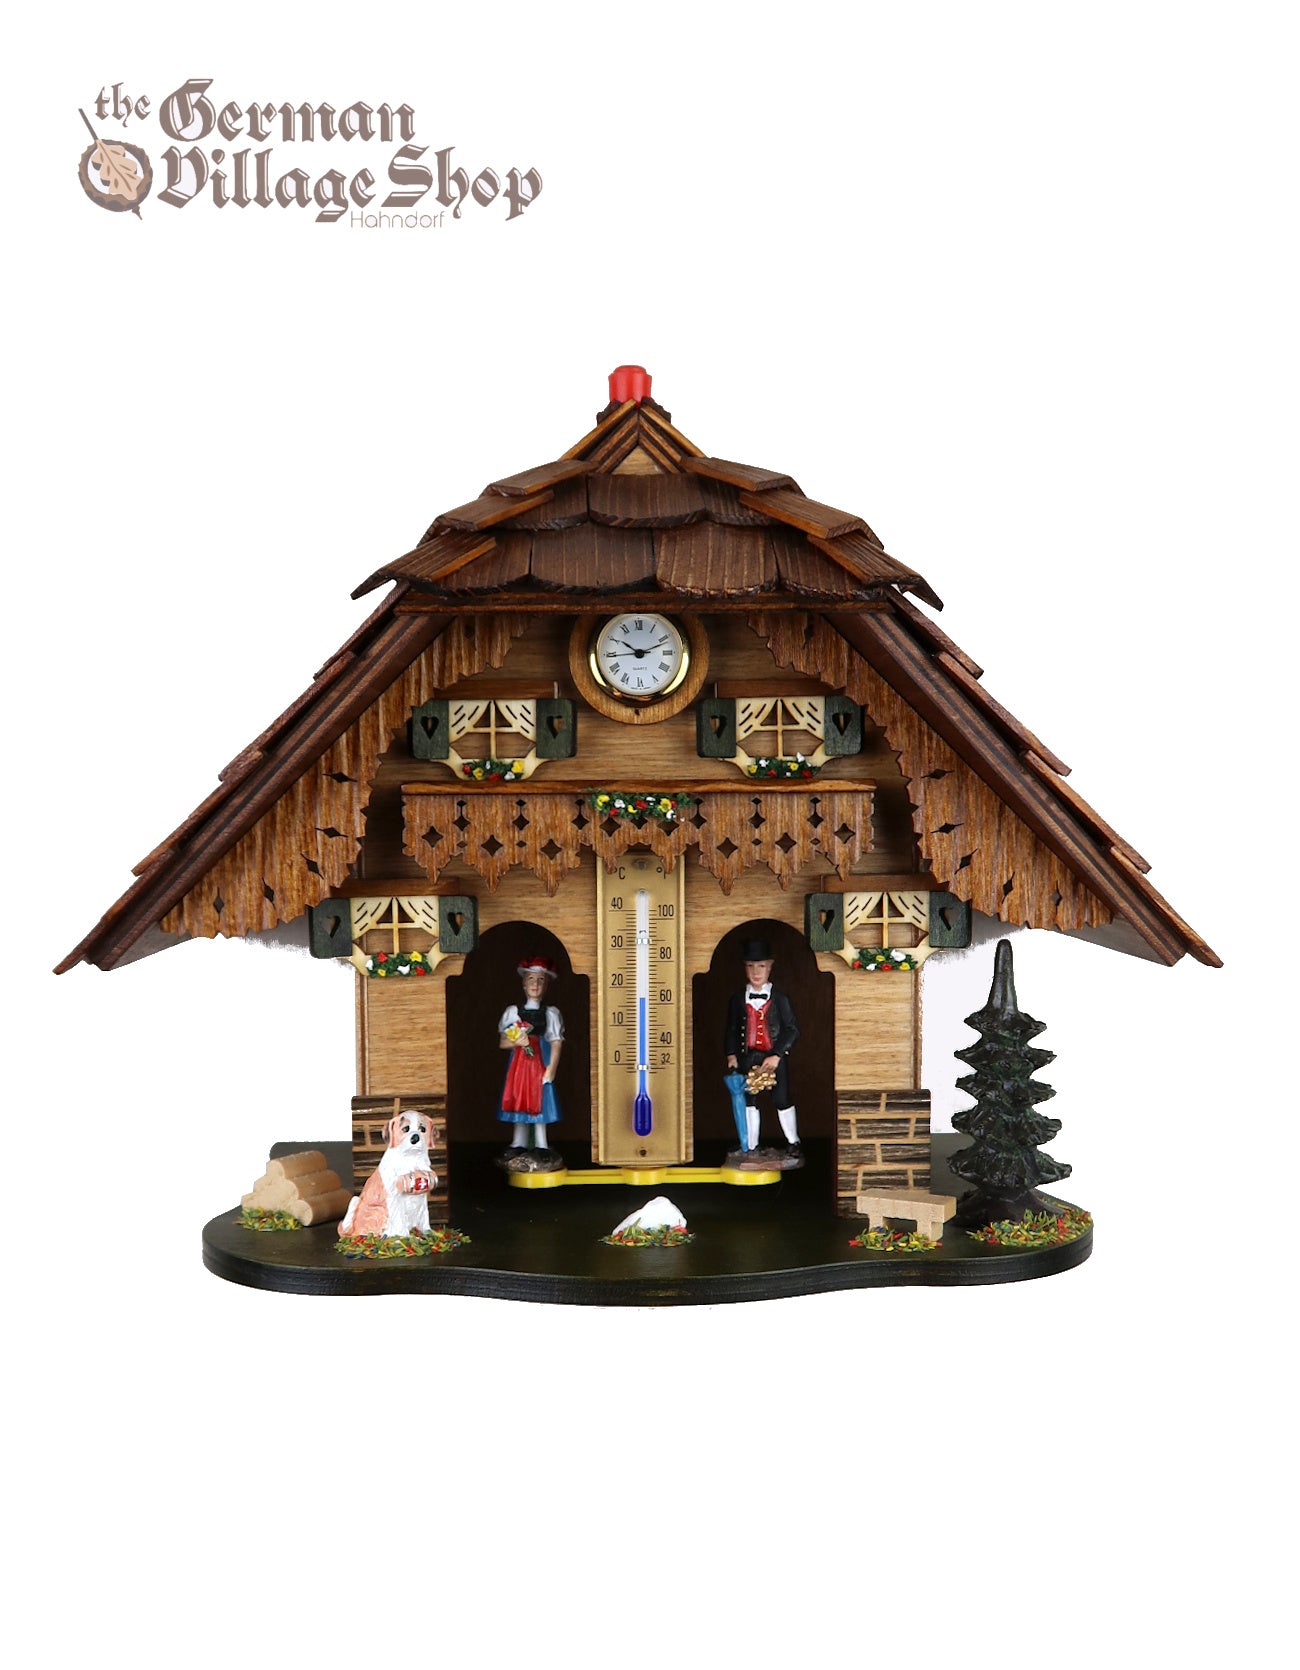 German made wooden Bavarian alpine weather house